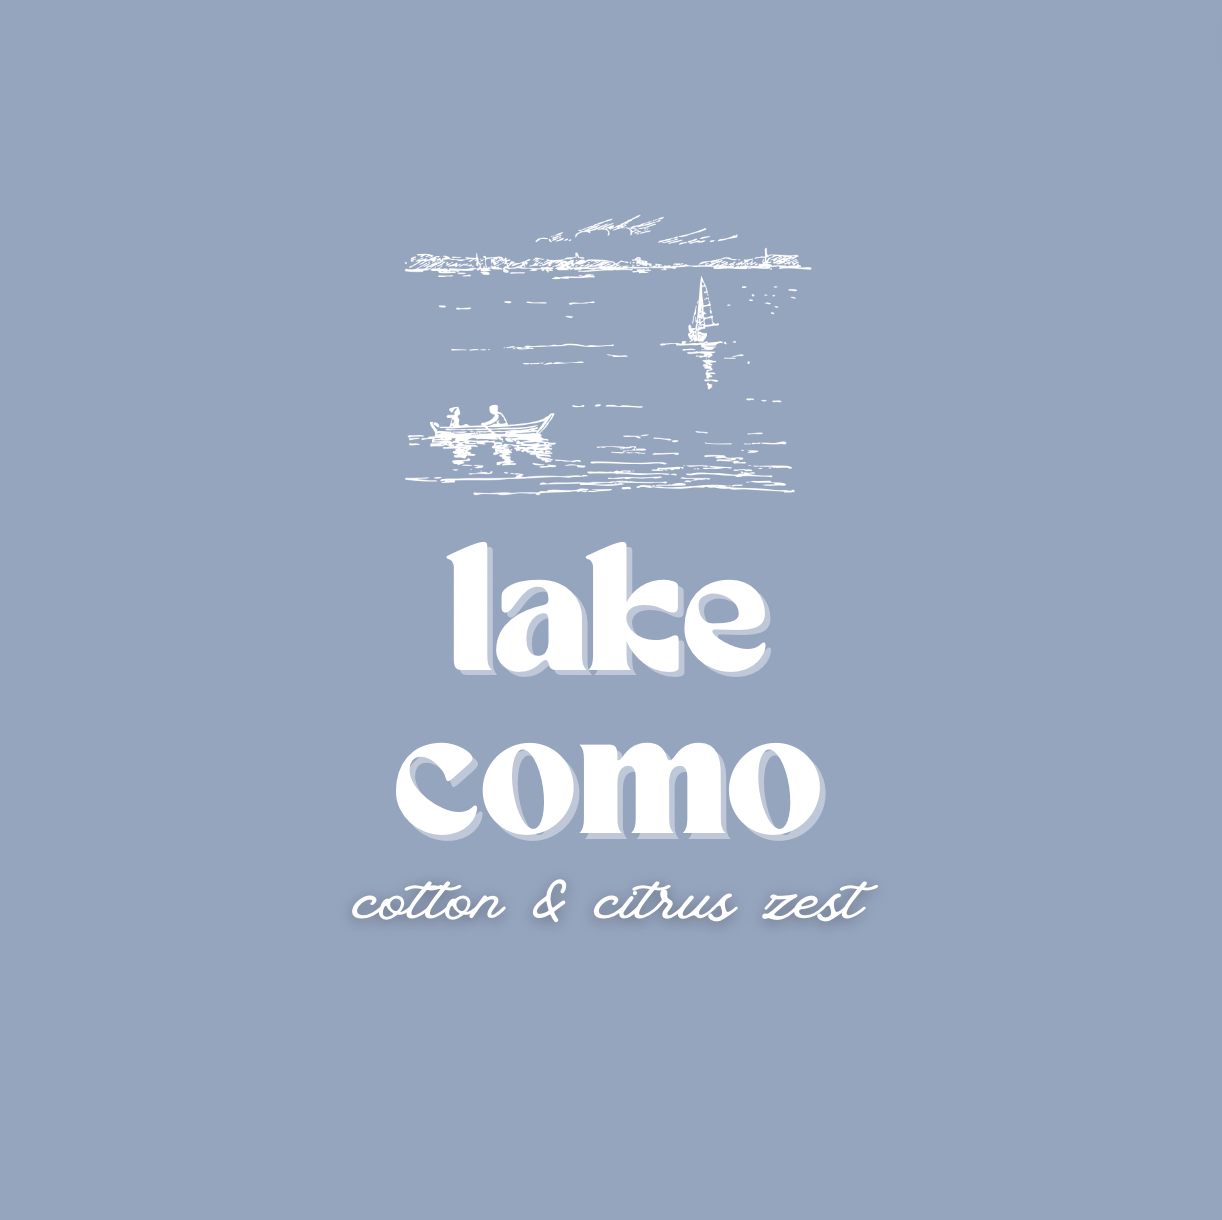 Destination: Lake Como